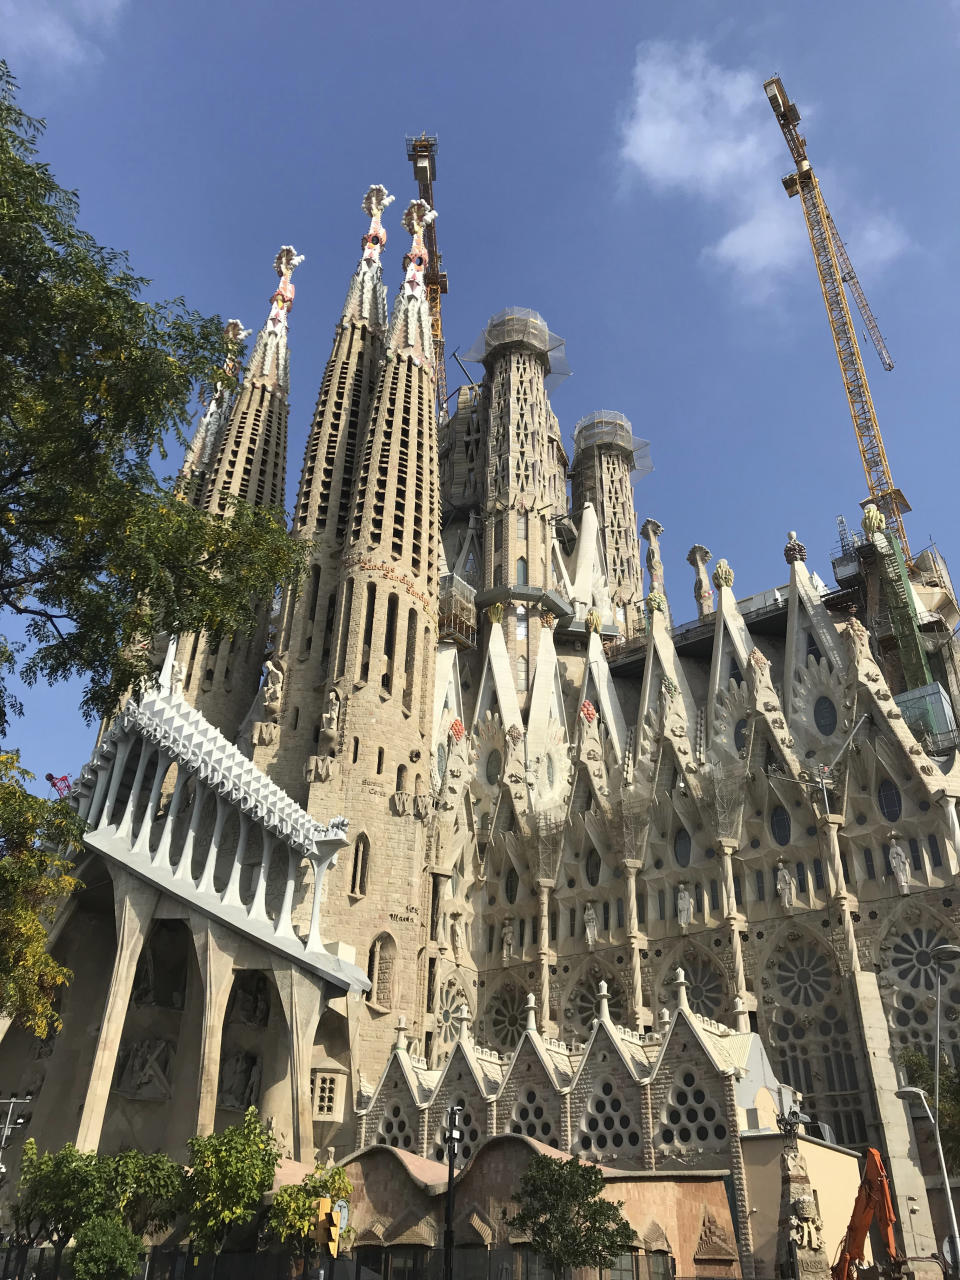 This Oct. 14, 2019 photo shows the Basílica de Sagrada Família, Anton Gaudí’s unfinished landmark, under construction in Barcelona, Spain. (Courtney Bonnell via AP)